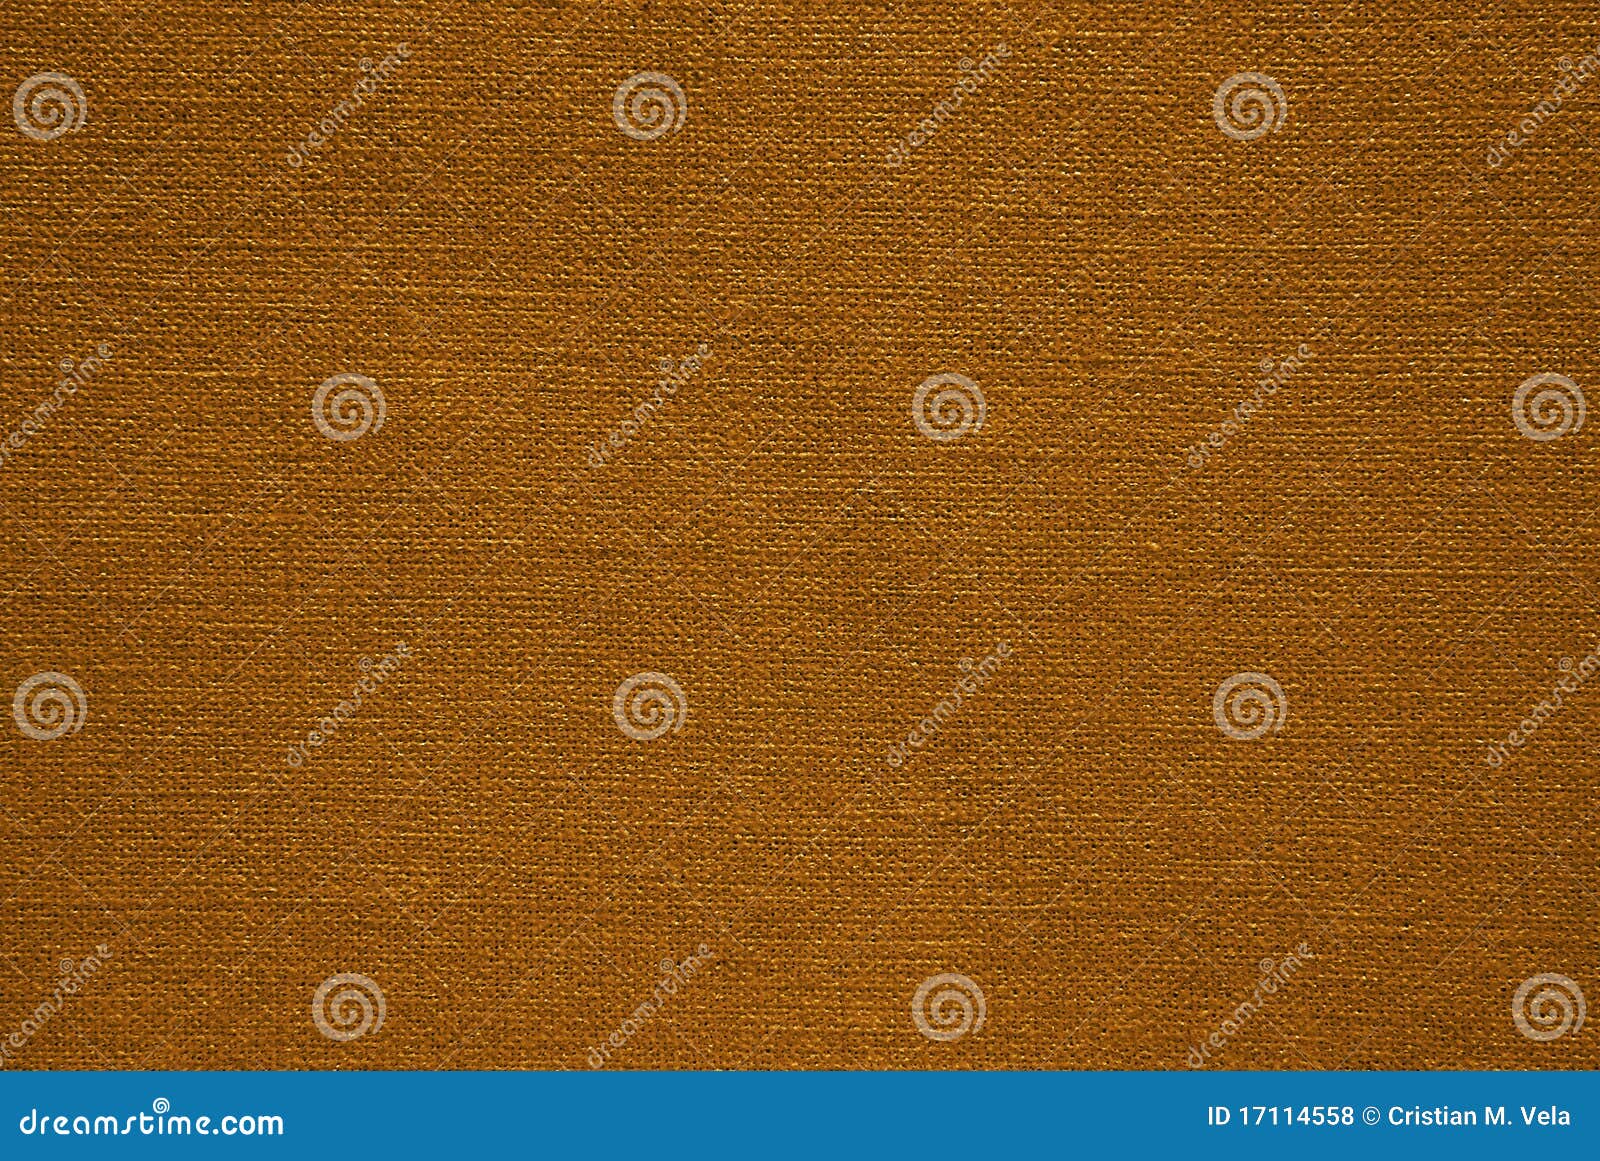 Burlap texture stock photo. Image of retro, linen, cotton - 17114558